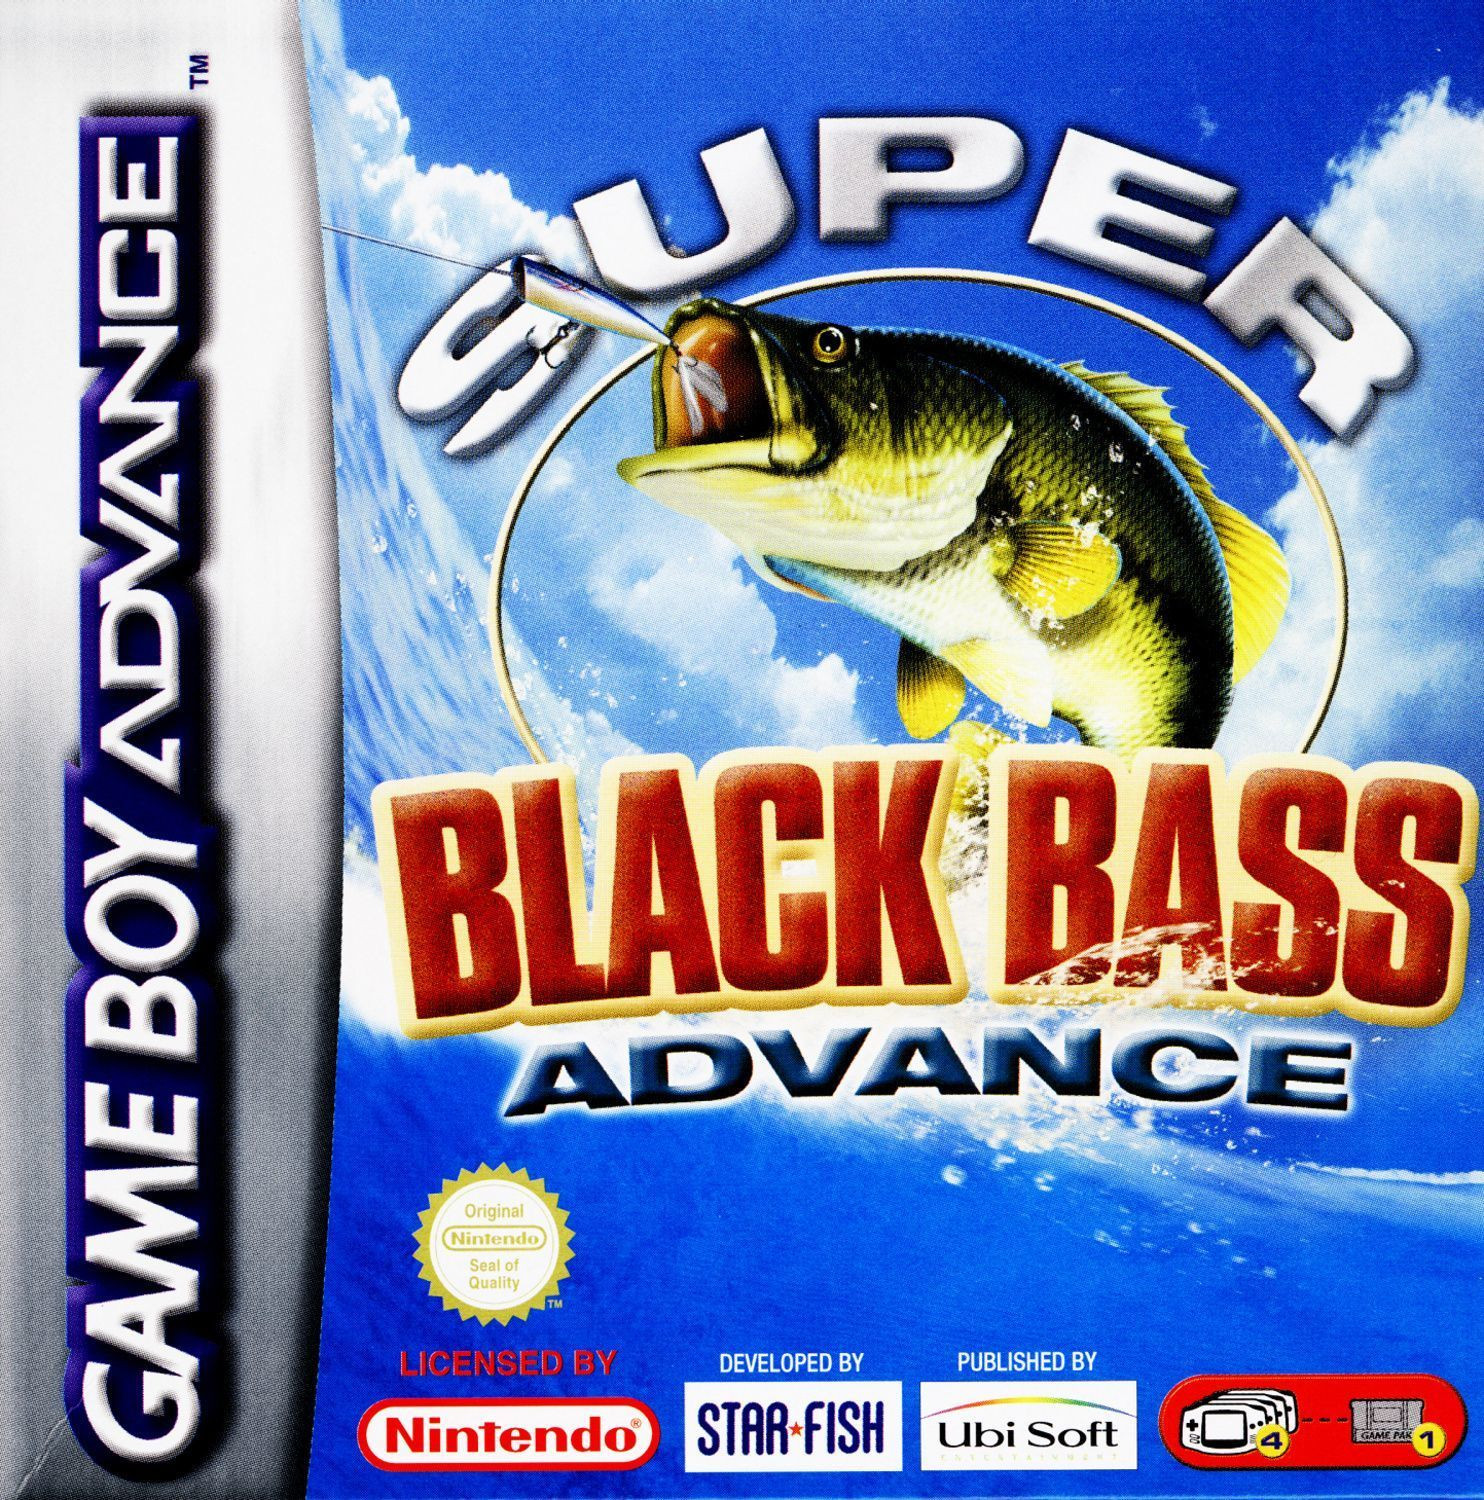 Image of Super Black Bass Advance